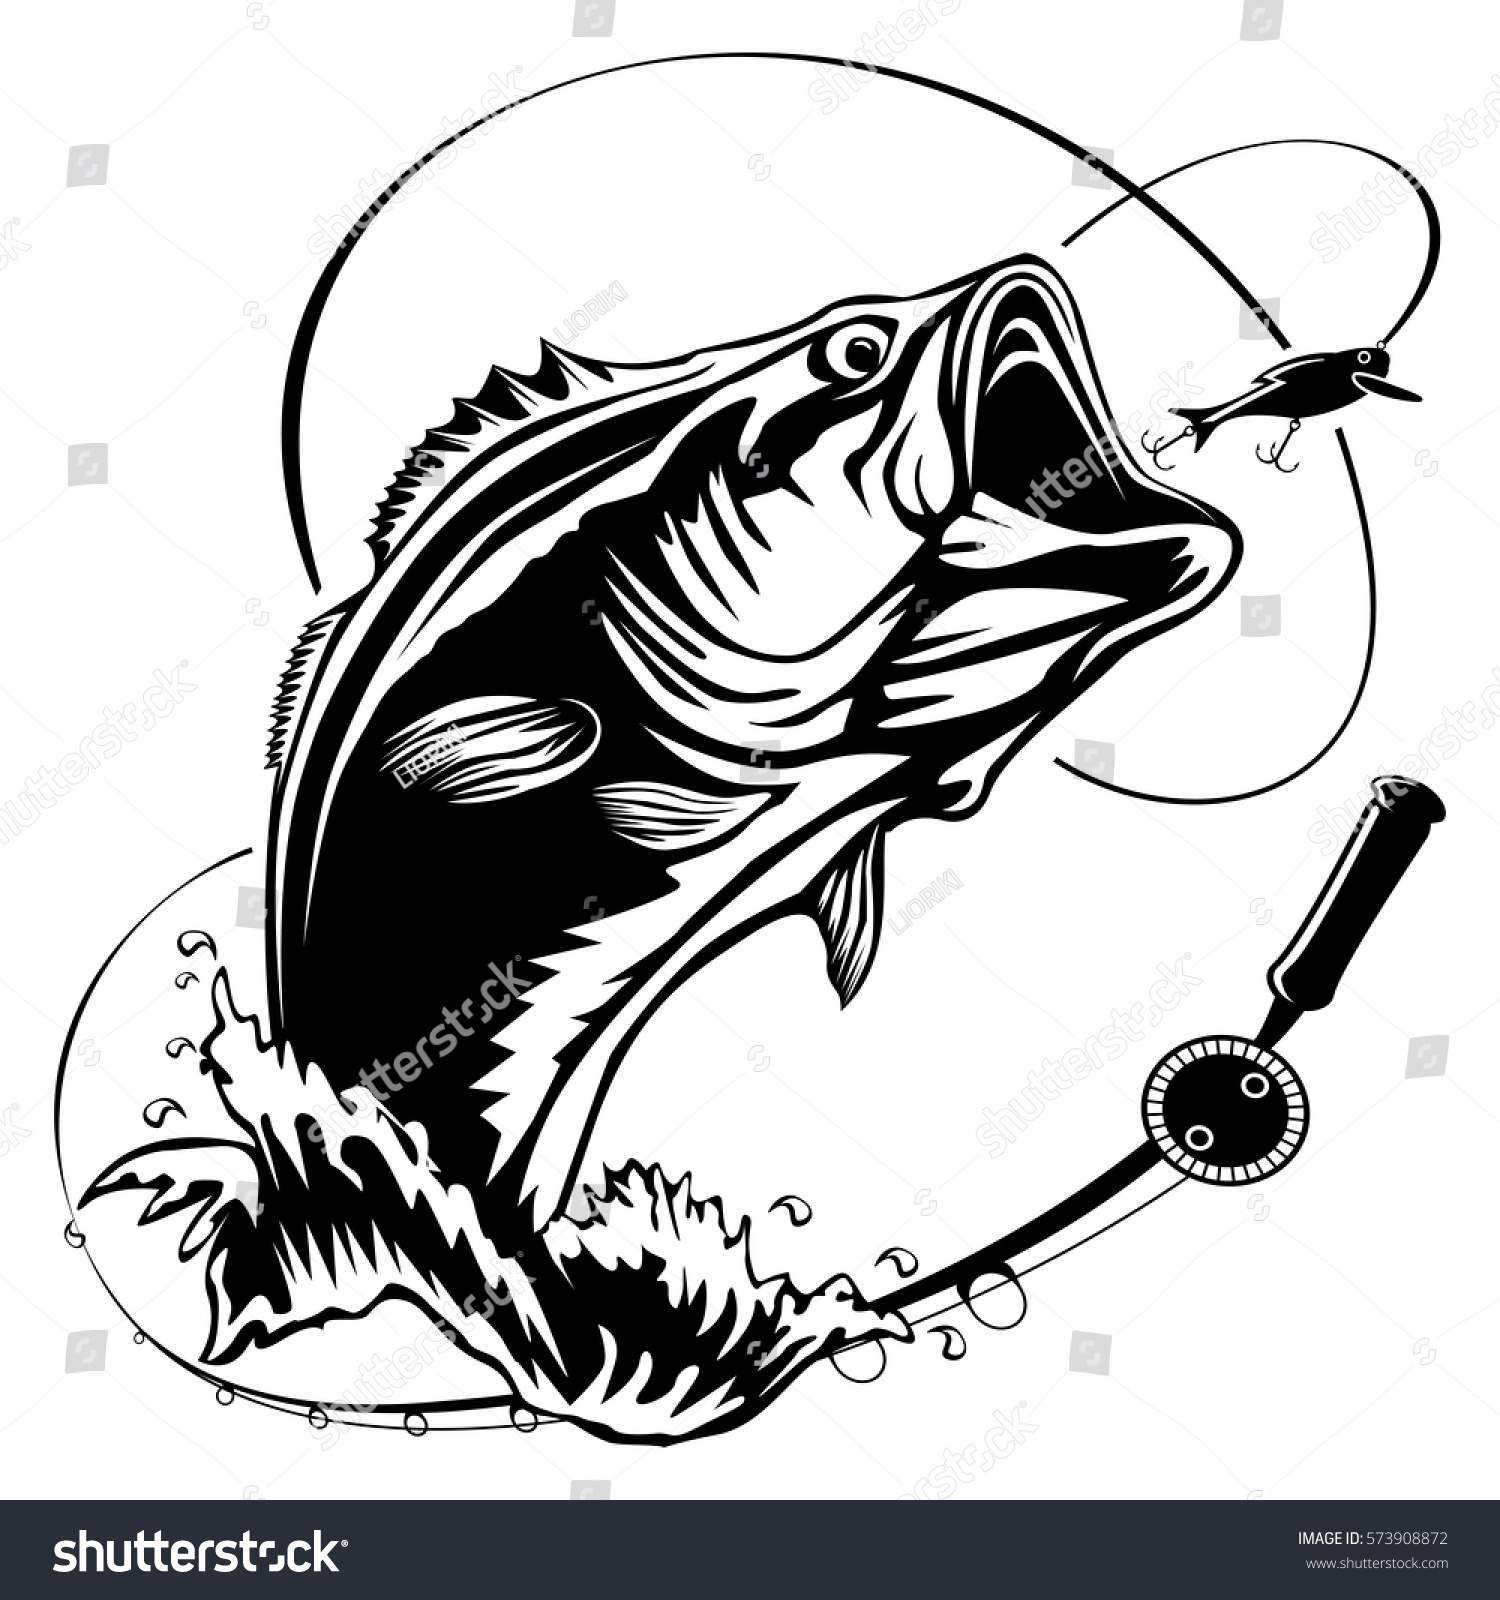 Fishing Logo Bass Fish Rod Club Vectores En Stock 573908872 - Shutterstock